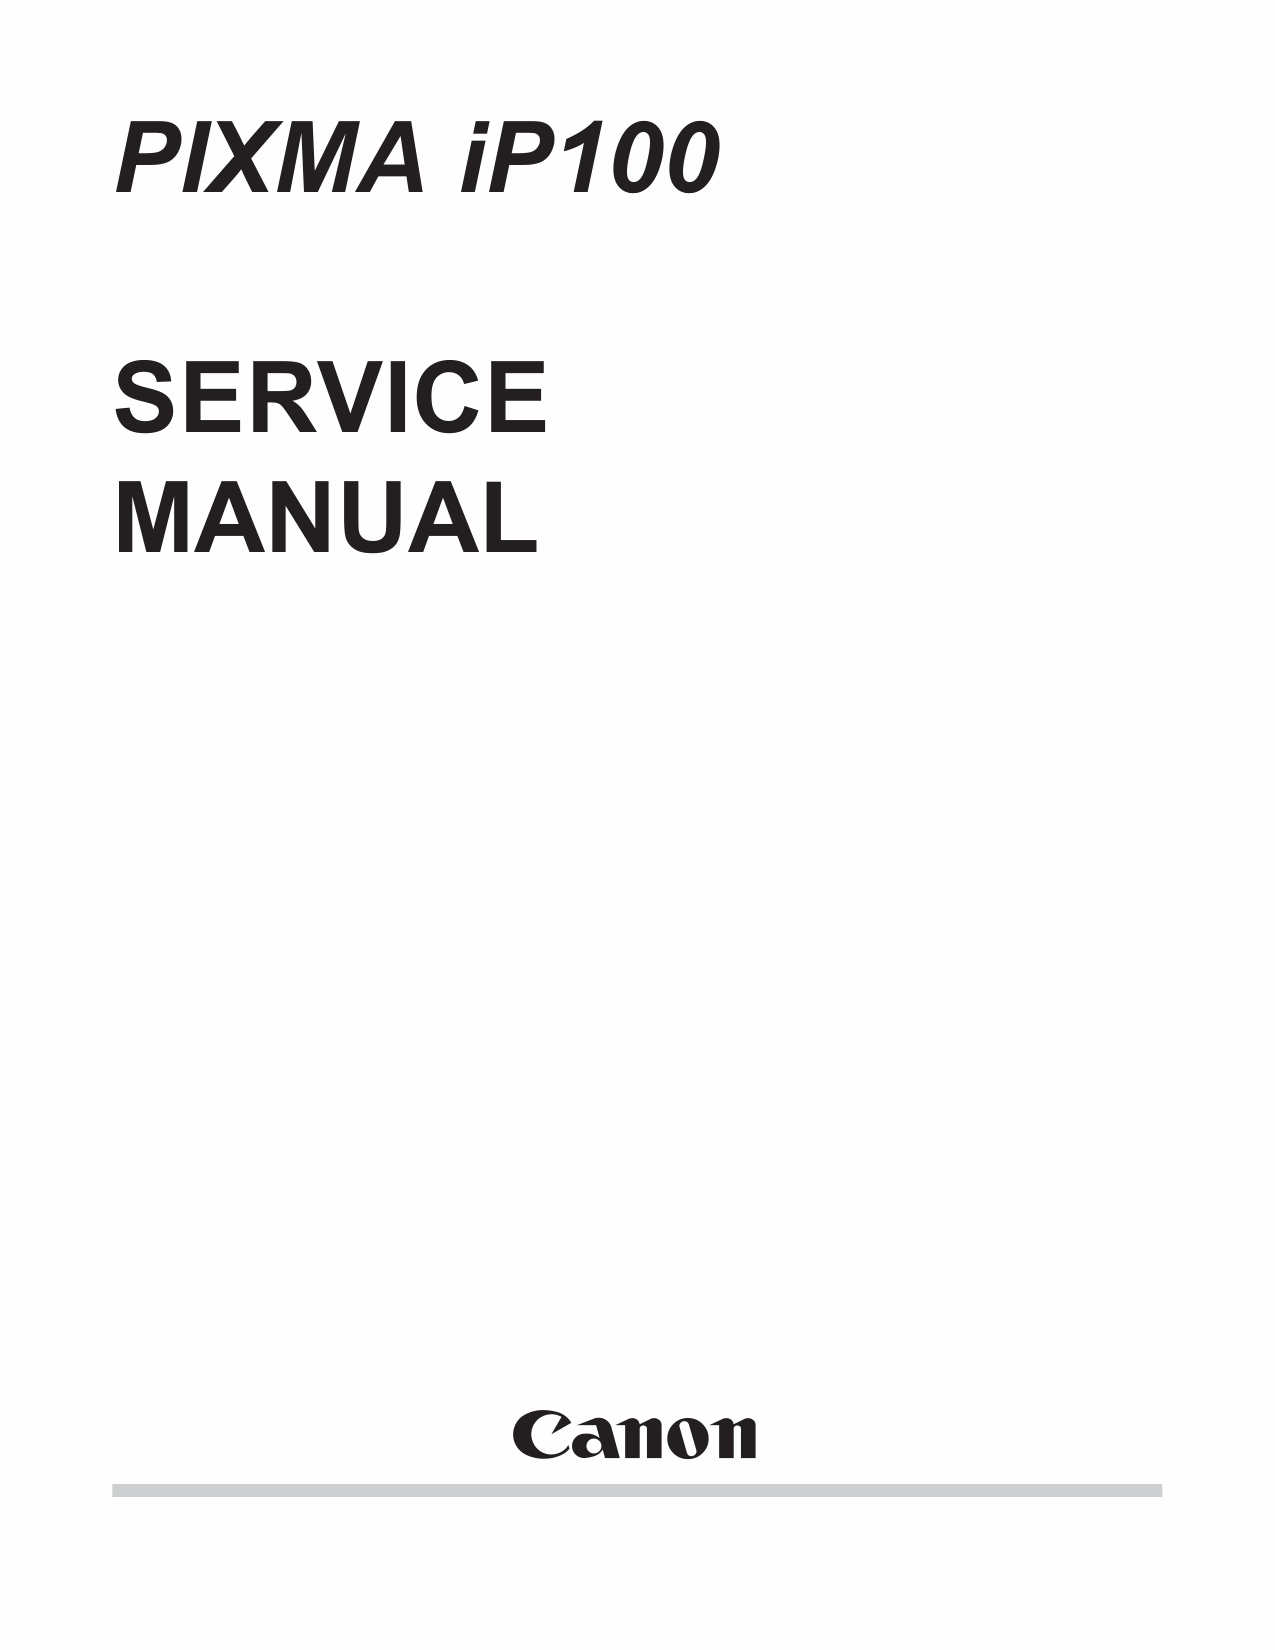 Canon PIXMA iP100 Parts and Service Manual-1